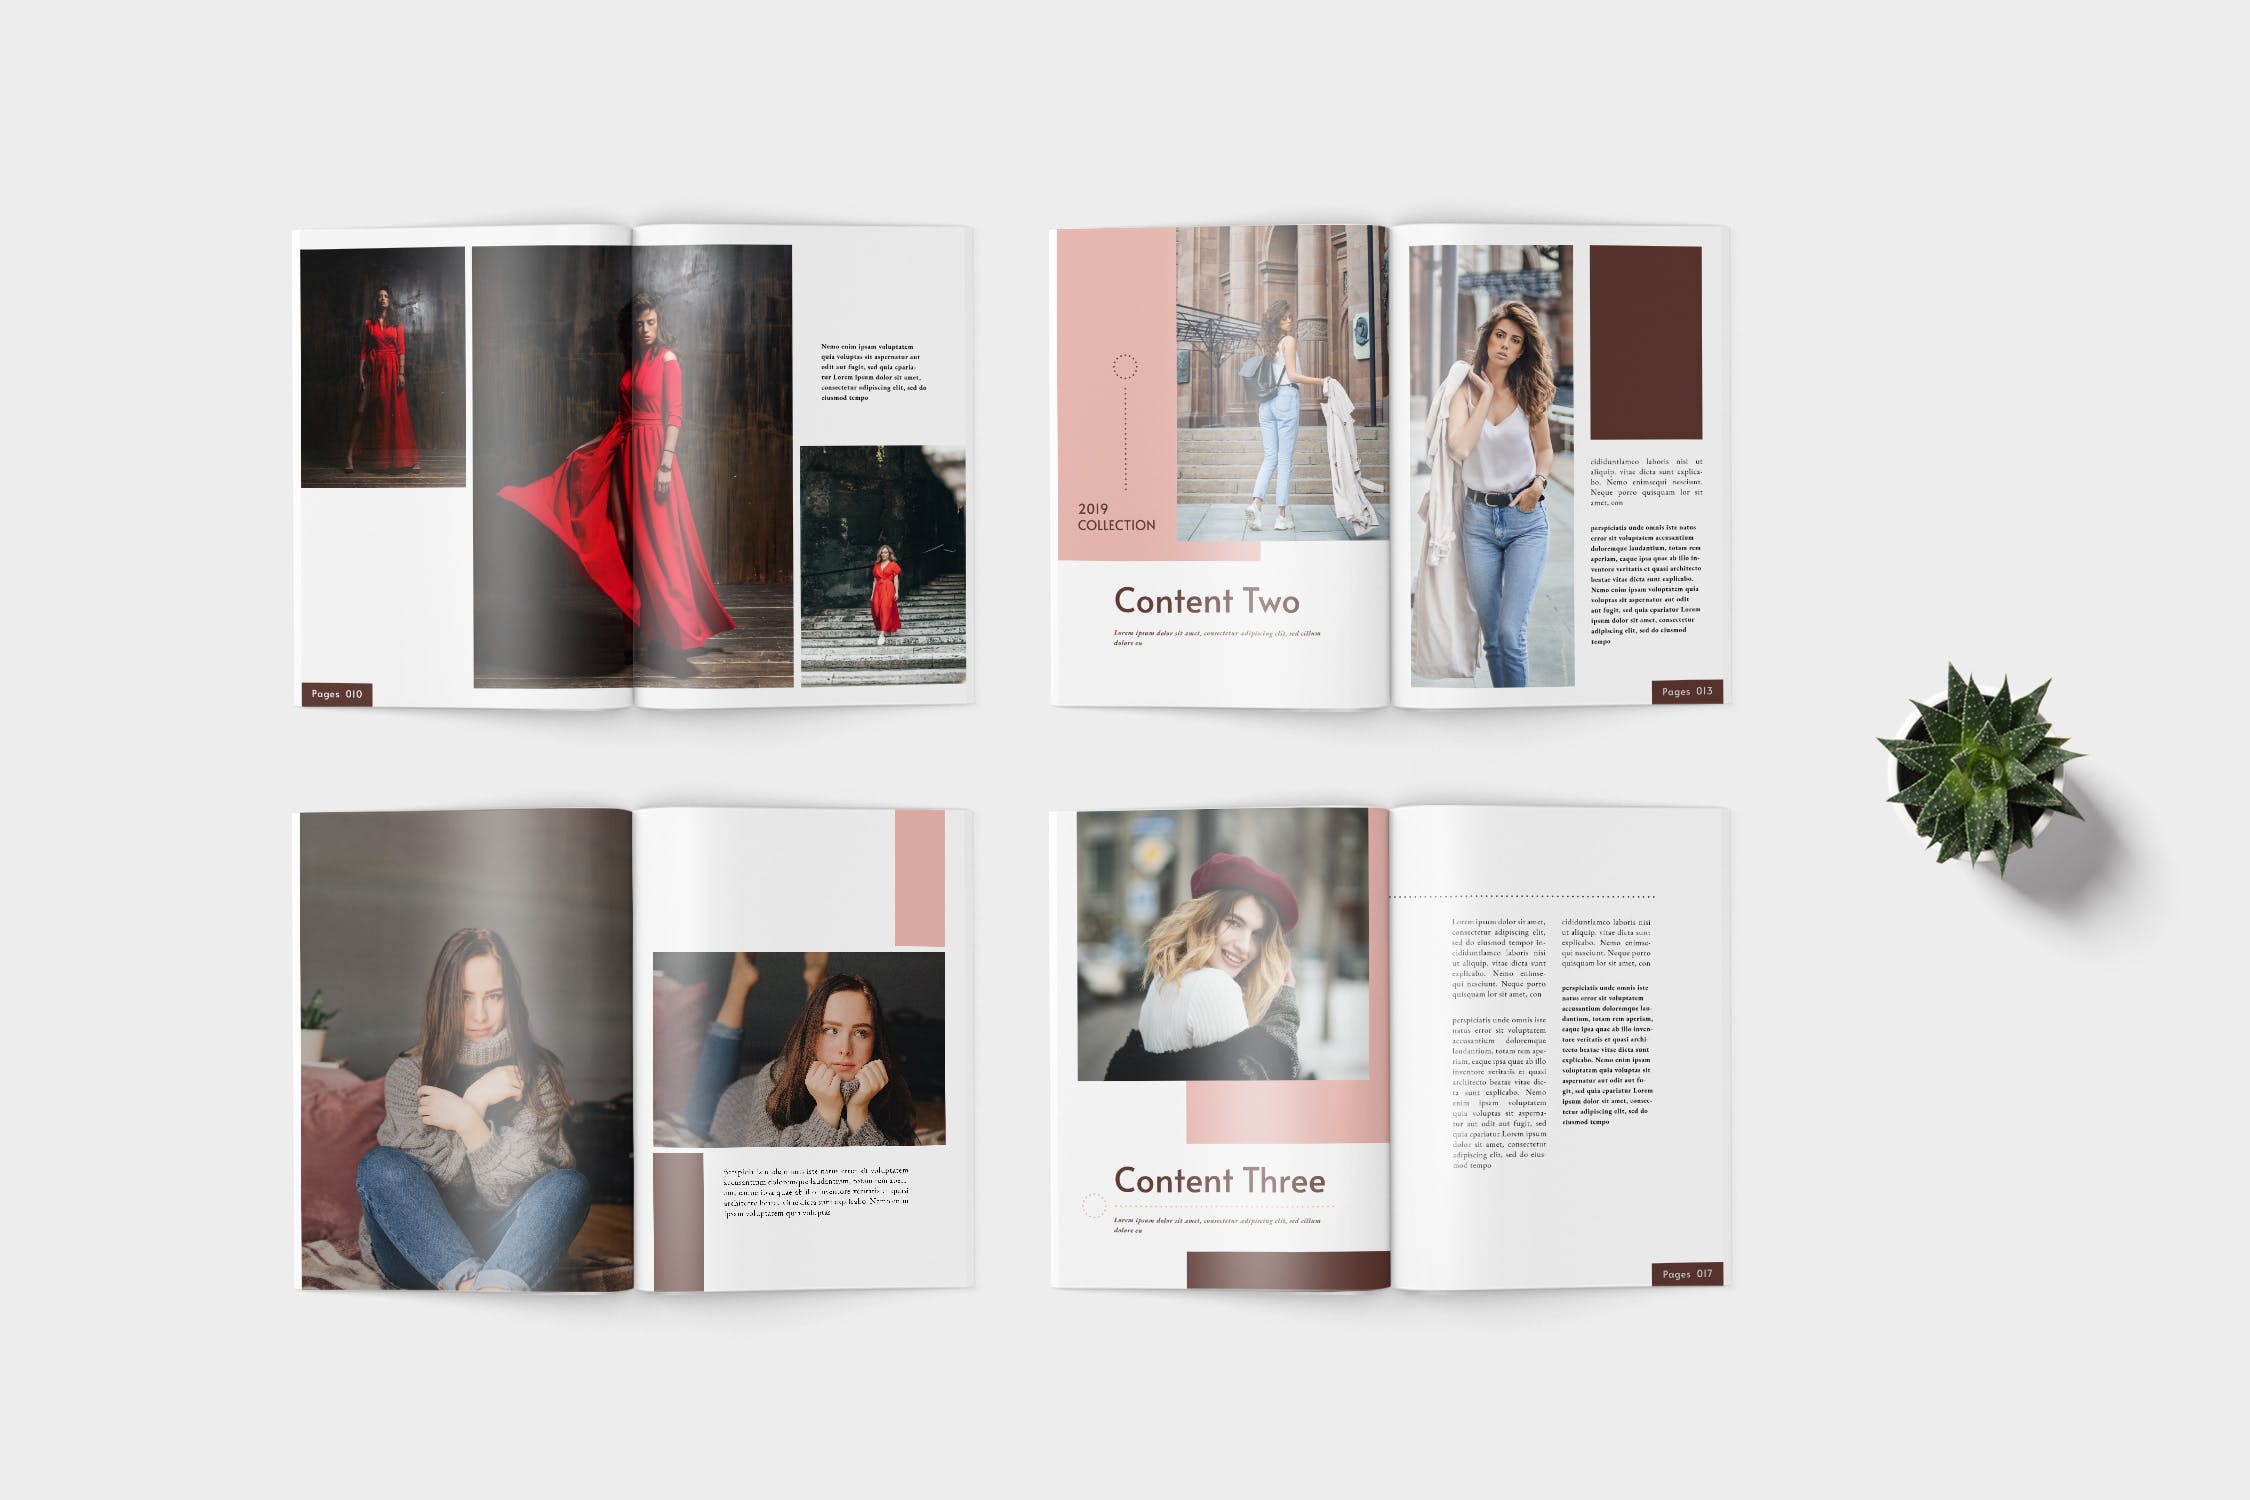 时装产品素材库精选目录设计模板 Elana Fashion Lookbook Catalogue插图(3)